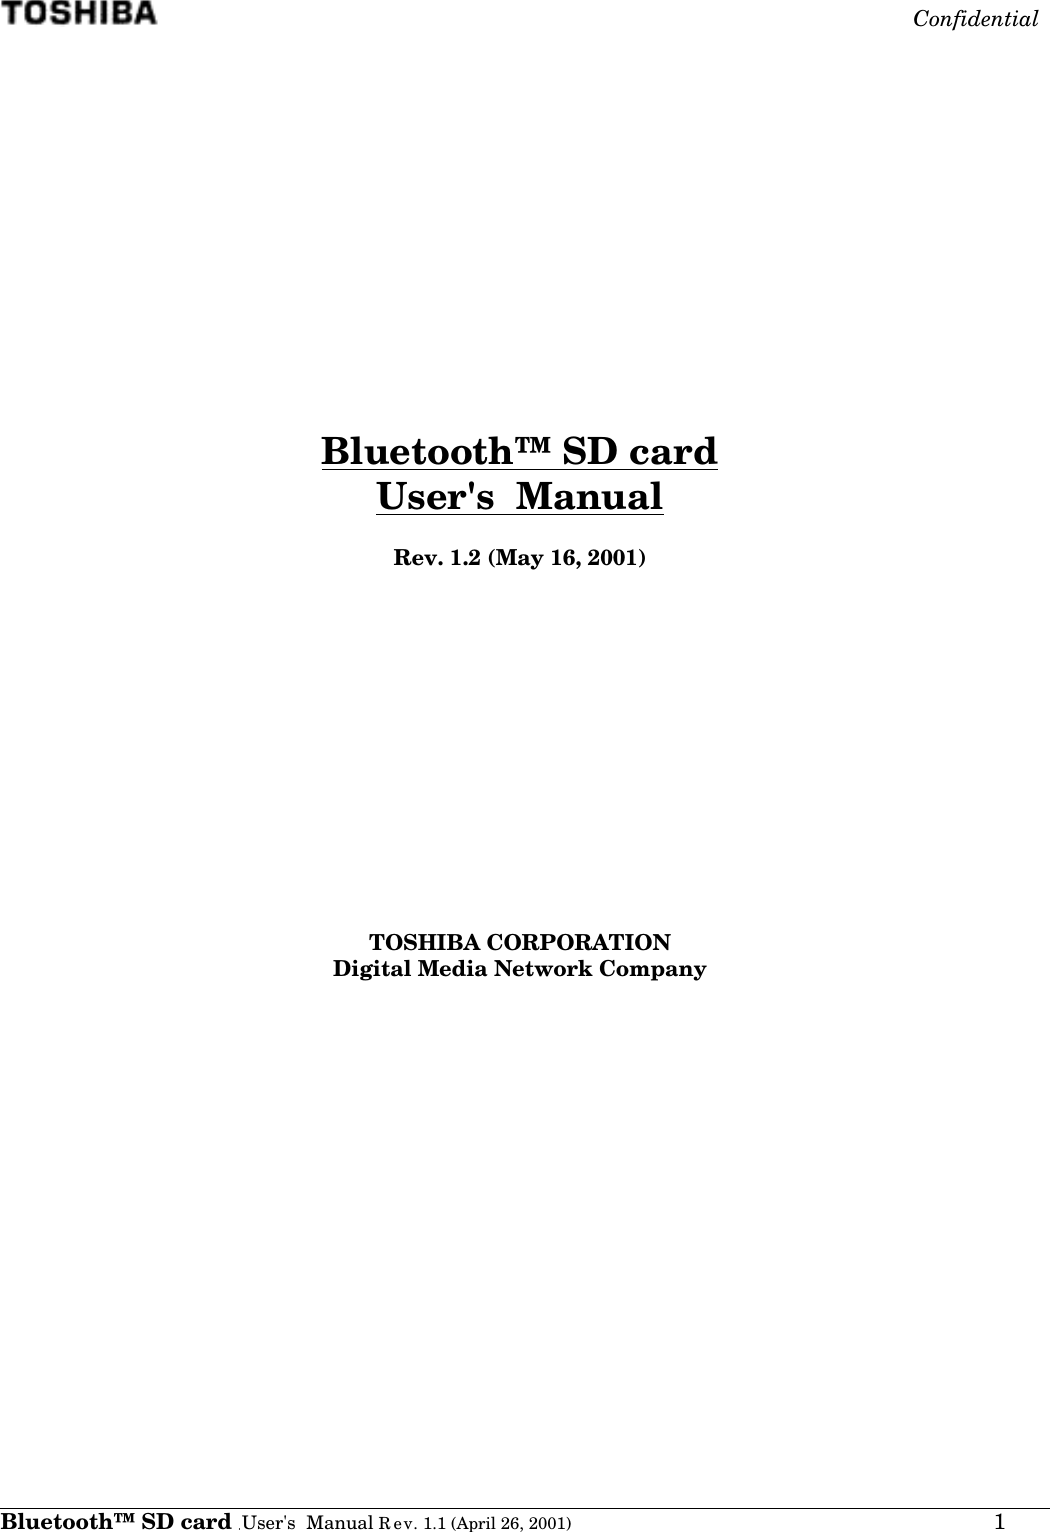 ConfidentialBluetooth™ SD card User&apos;s  Manual R ev. 1.1 (April 26, 2001)         1Bluetooth™ SD cardUser&apos;s  ManualRev. 1.2 (May 16, 2001)TOSHIBA CORPORATIONDigital Media Network Company